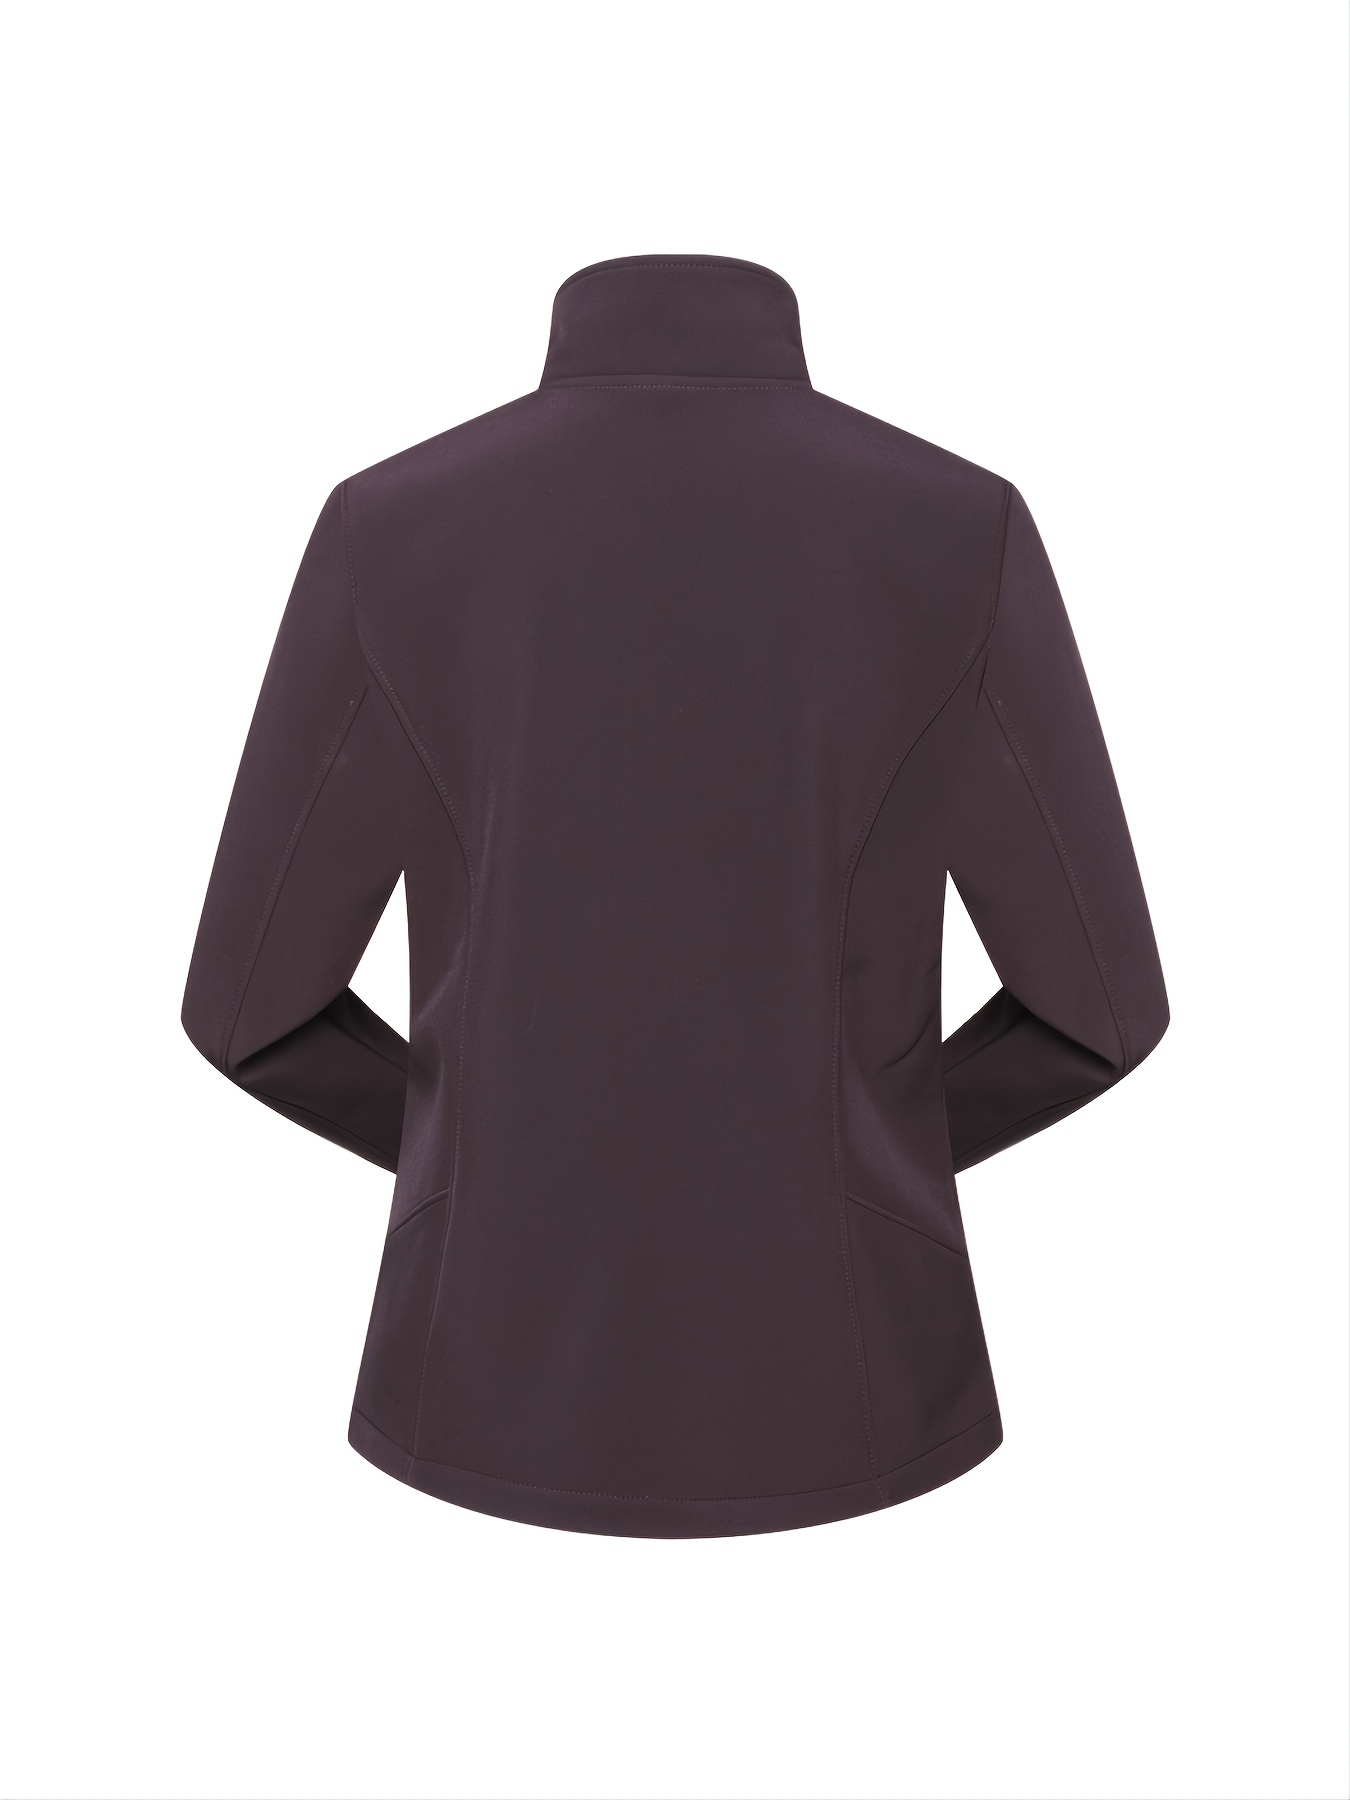 Soft-Shell Jacket, Windproof & Waterproof Stand Collar Jacket Outdoor  Fishing Hiking Jacket, Women's Outerwear